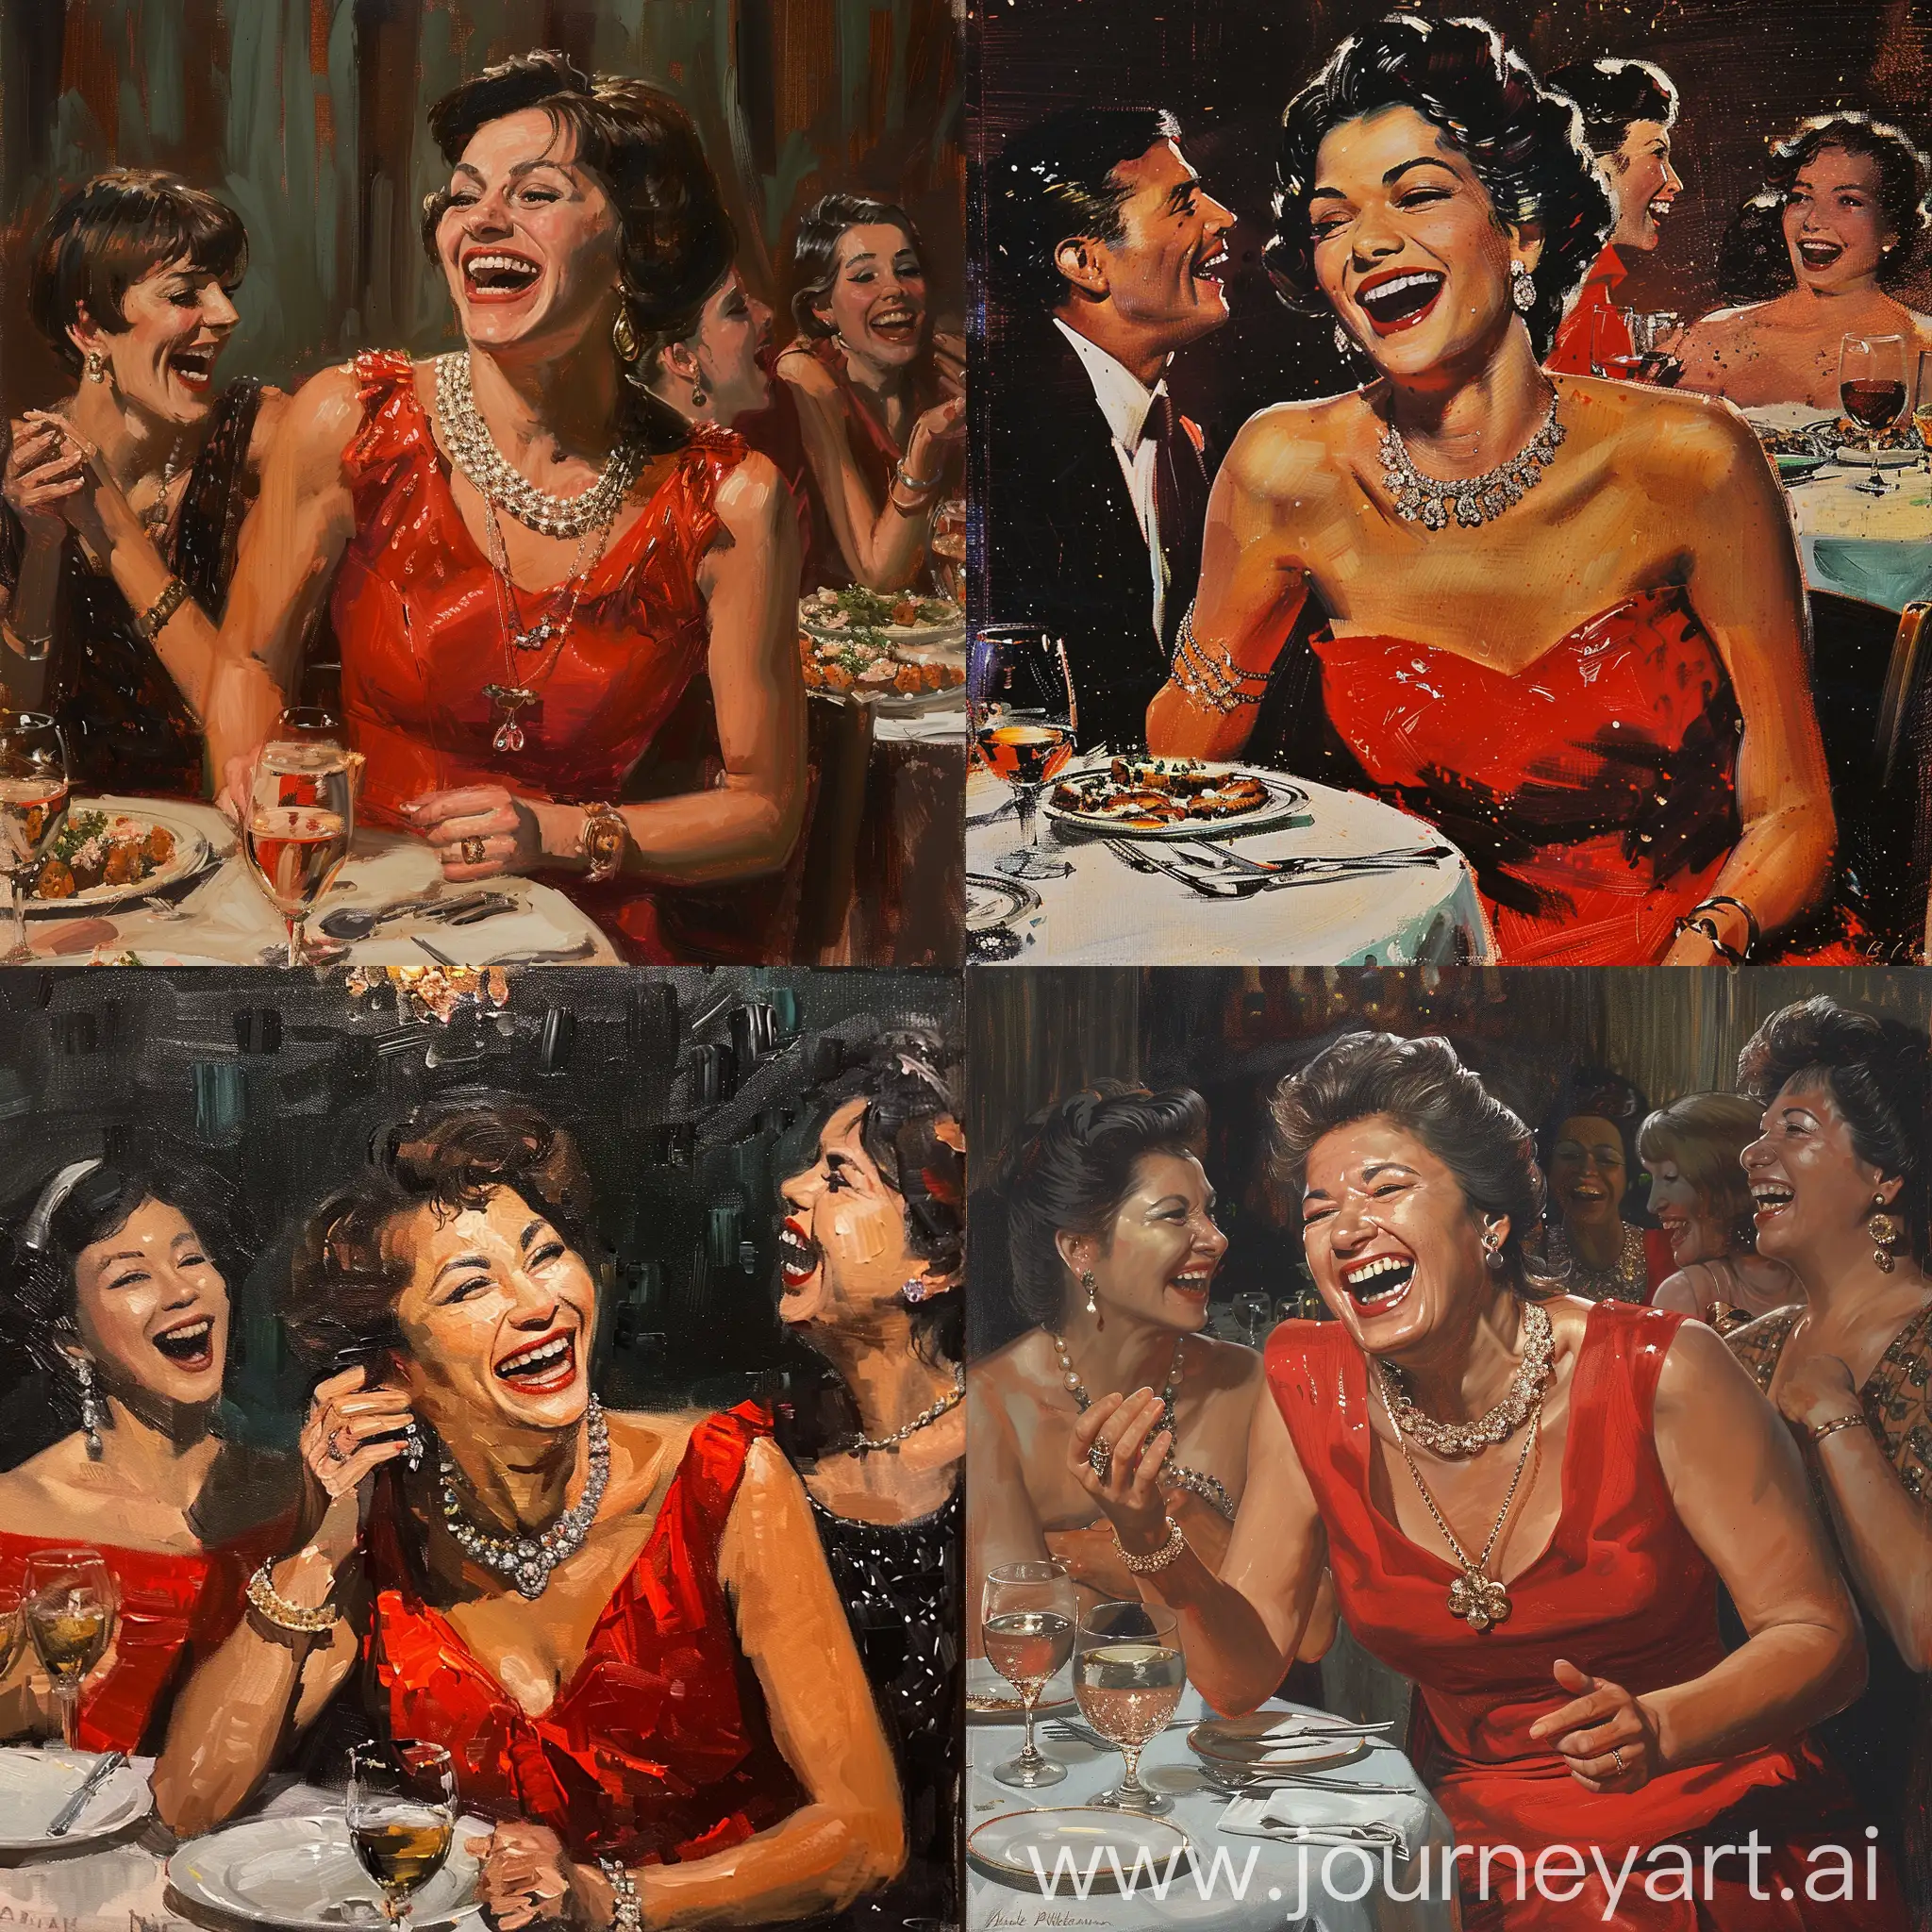 Elegant-1960s-Dinner-Party-Joyful-Woman-in-Red-Dress-with-Friends